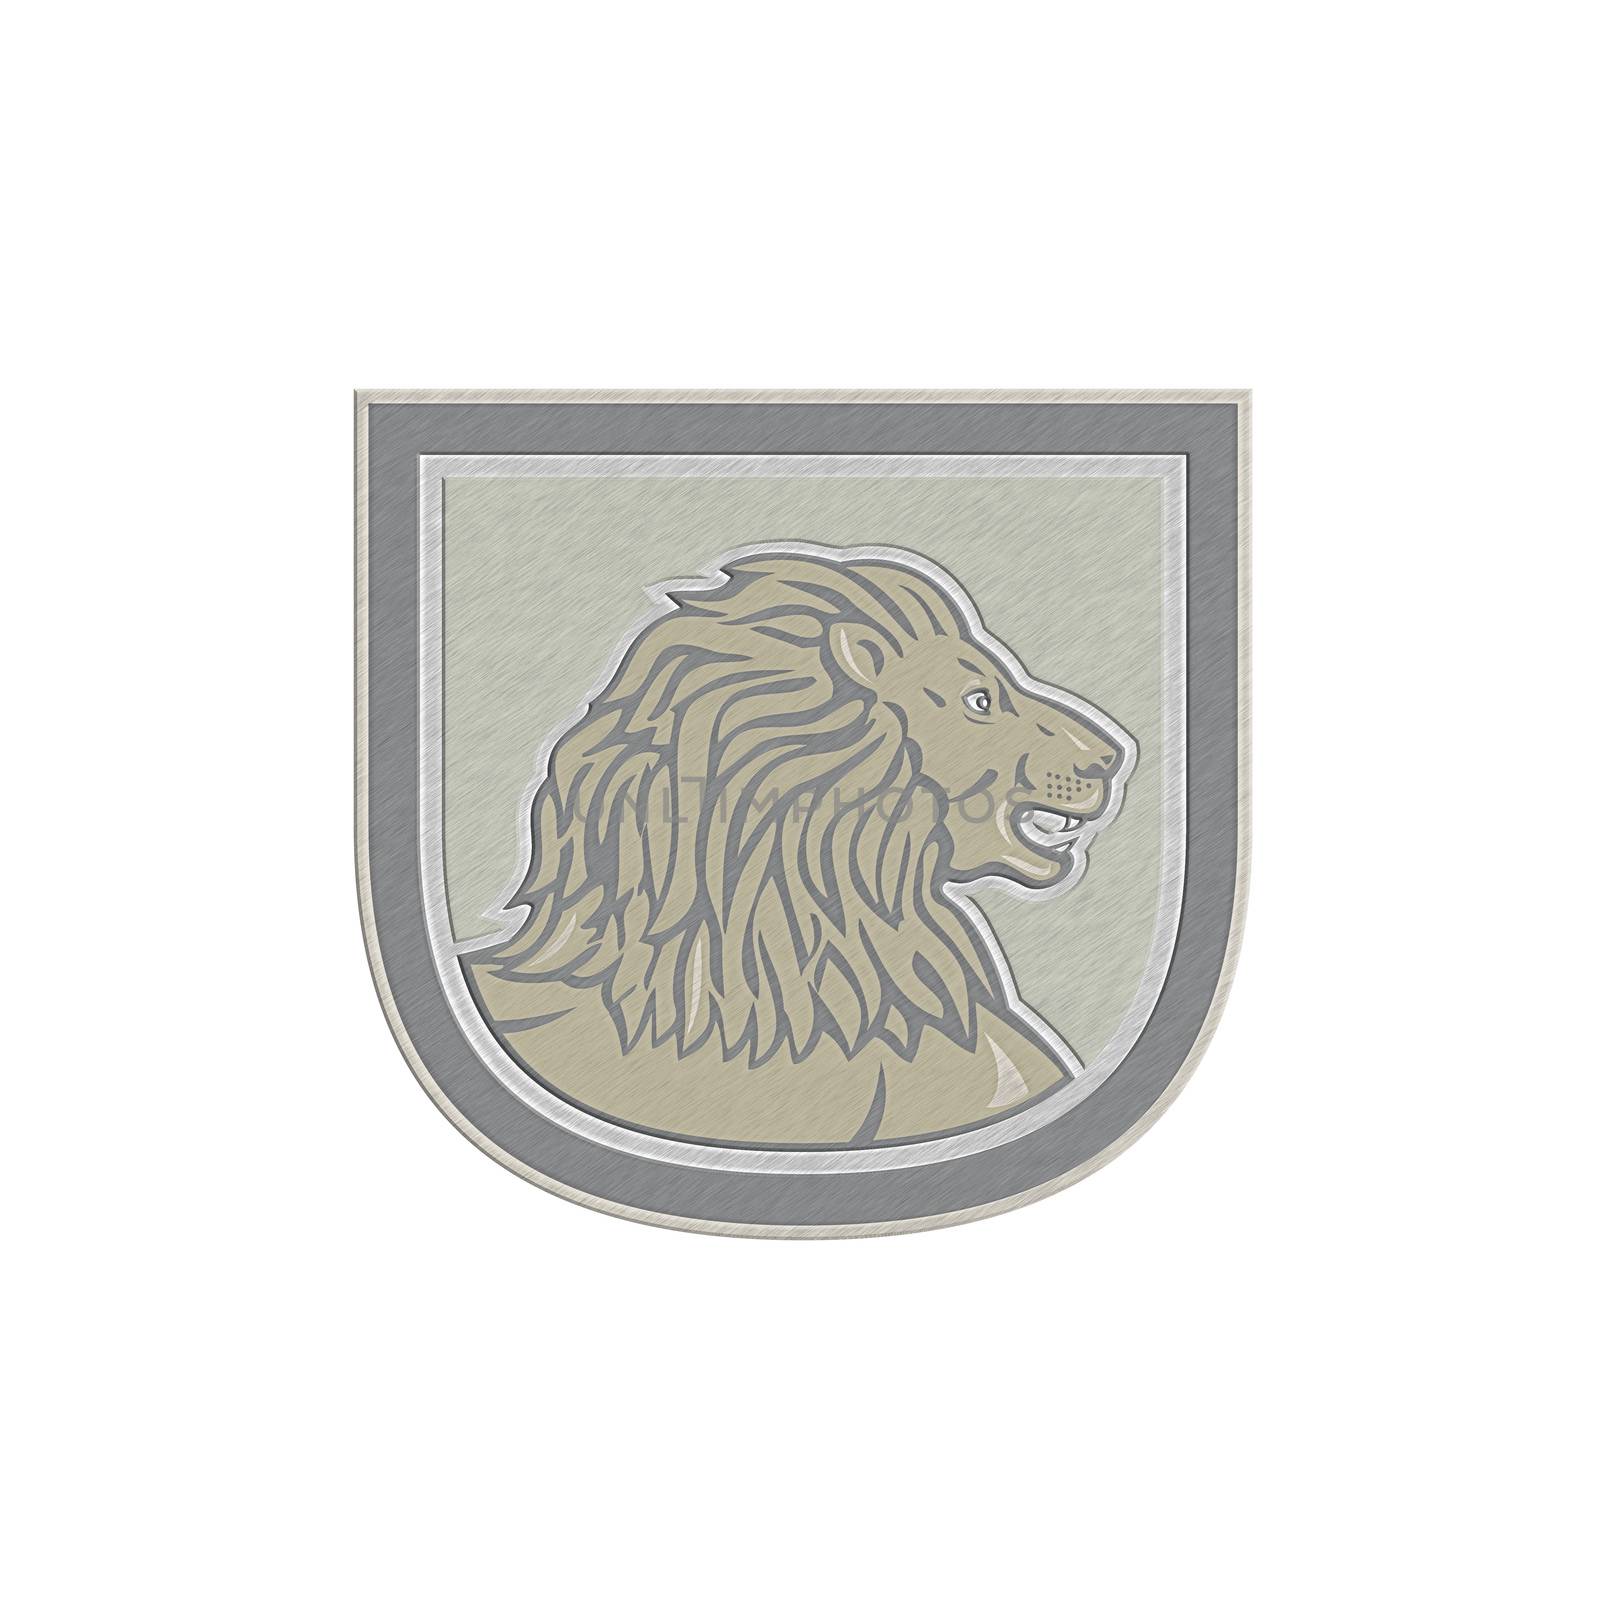 Metallic Lion Big Cat Head Side Shield by patrimonio